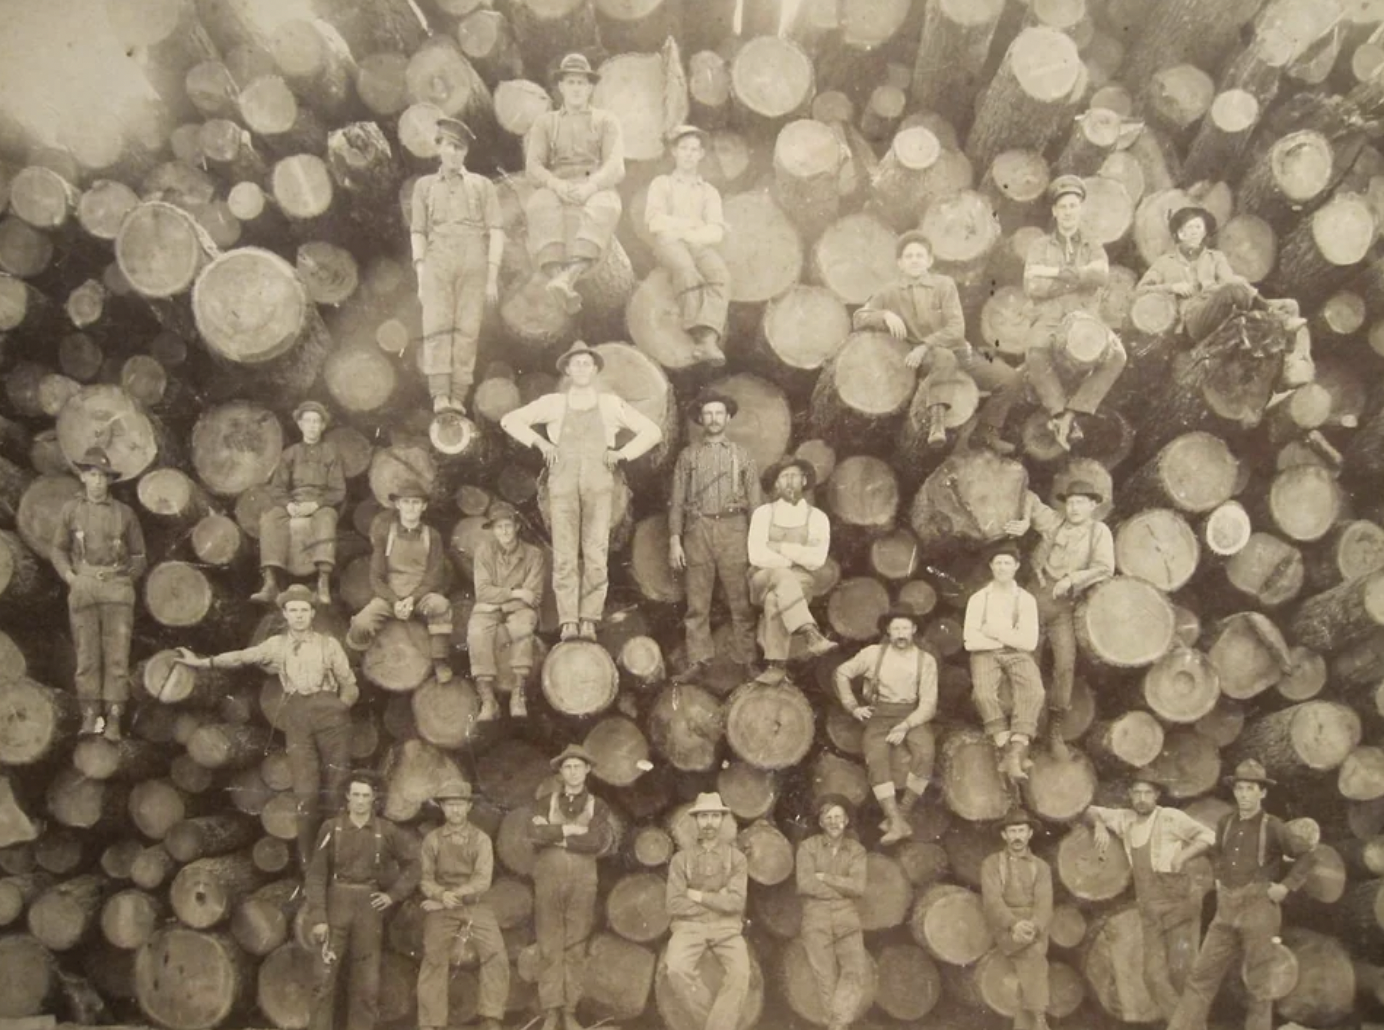 21 Old-Growth Logging Pics to Make You Feel Like Paul Bunyan